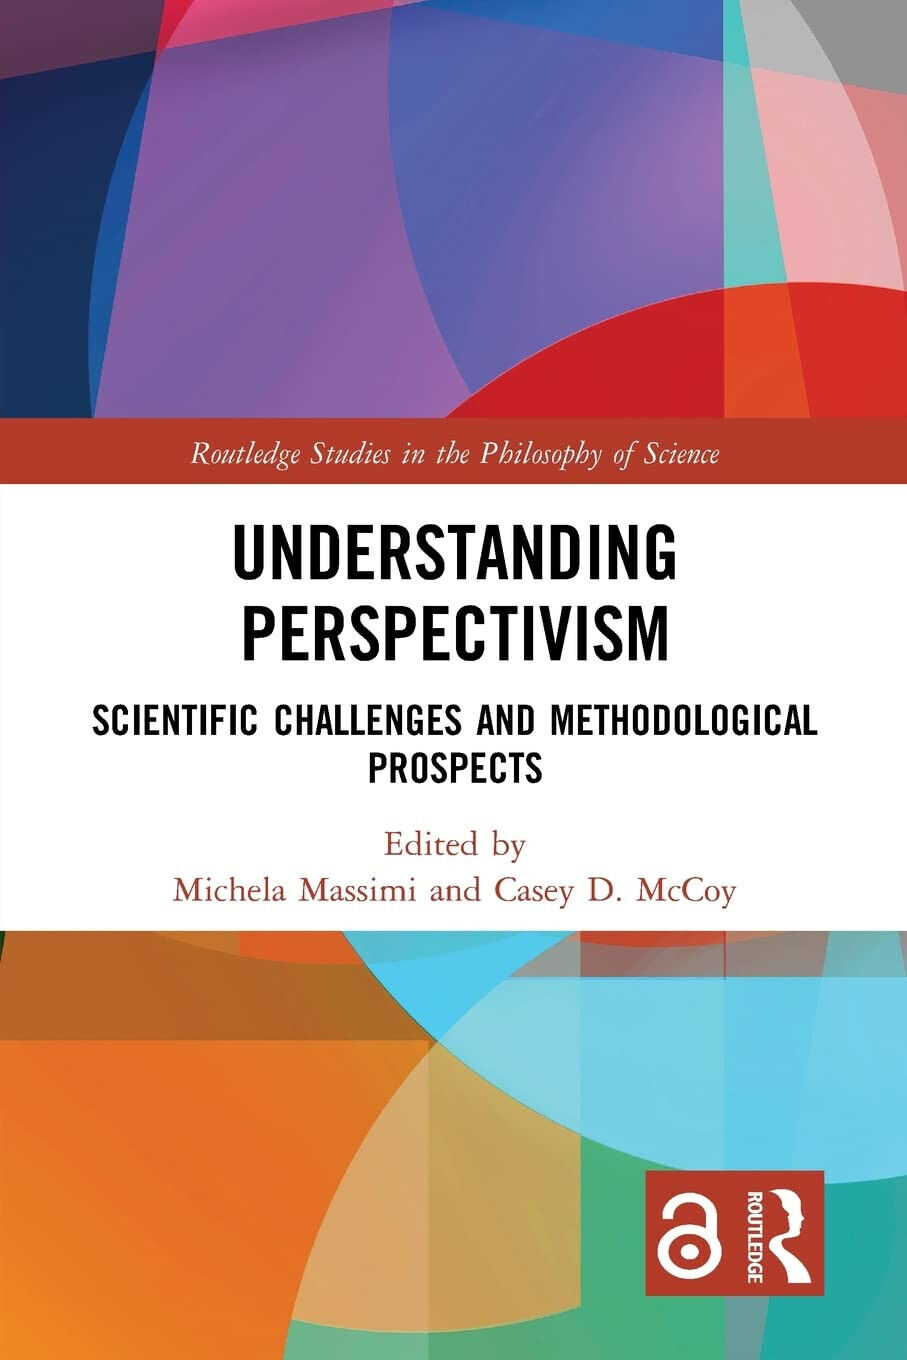 Understanding Perspectivism - Michela Massimi - Taylor & Francis, 2021